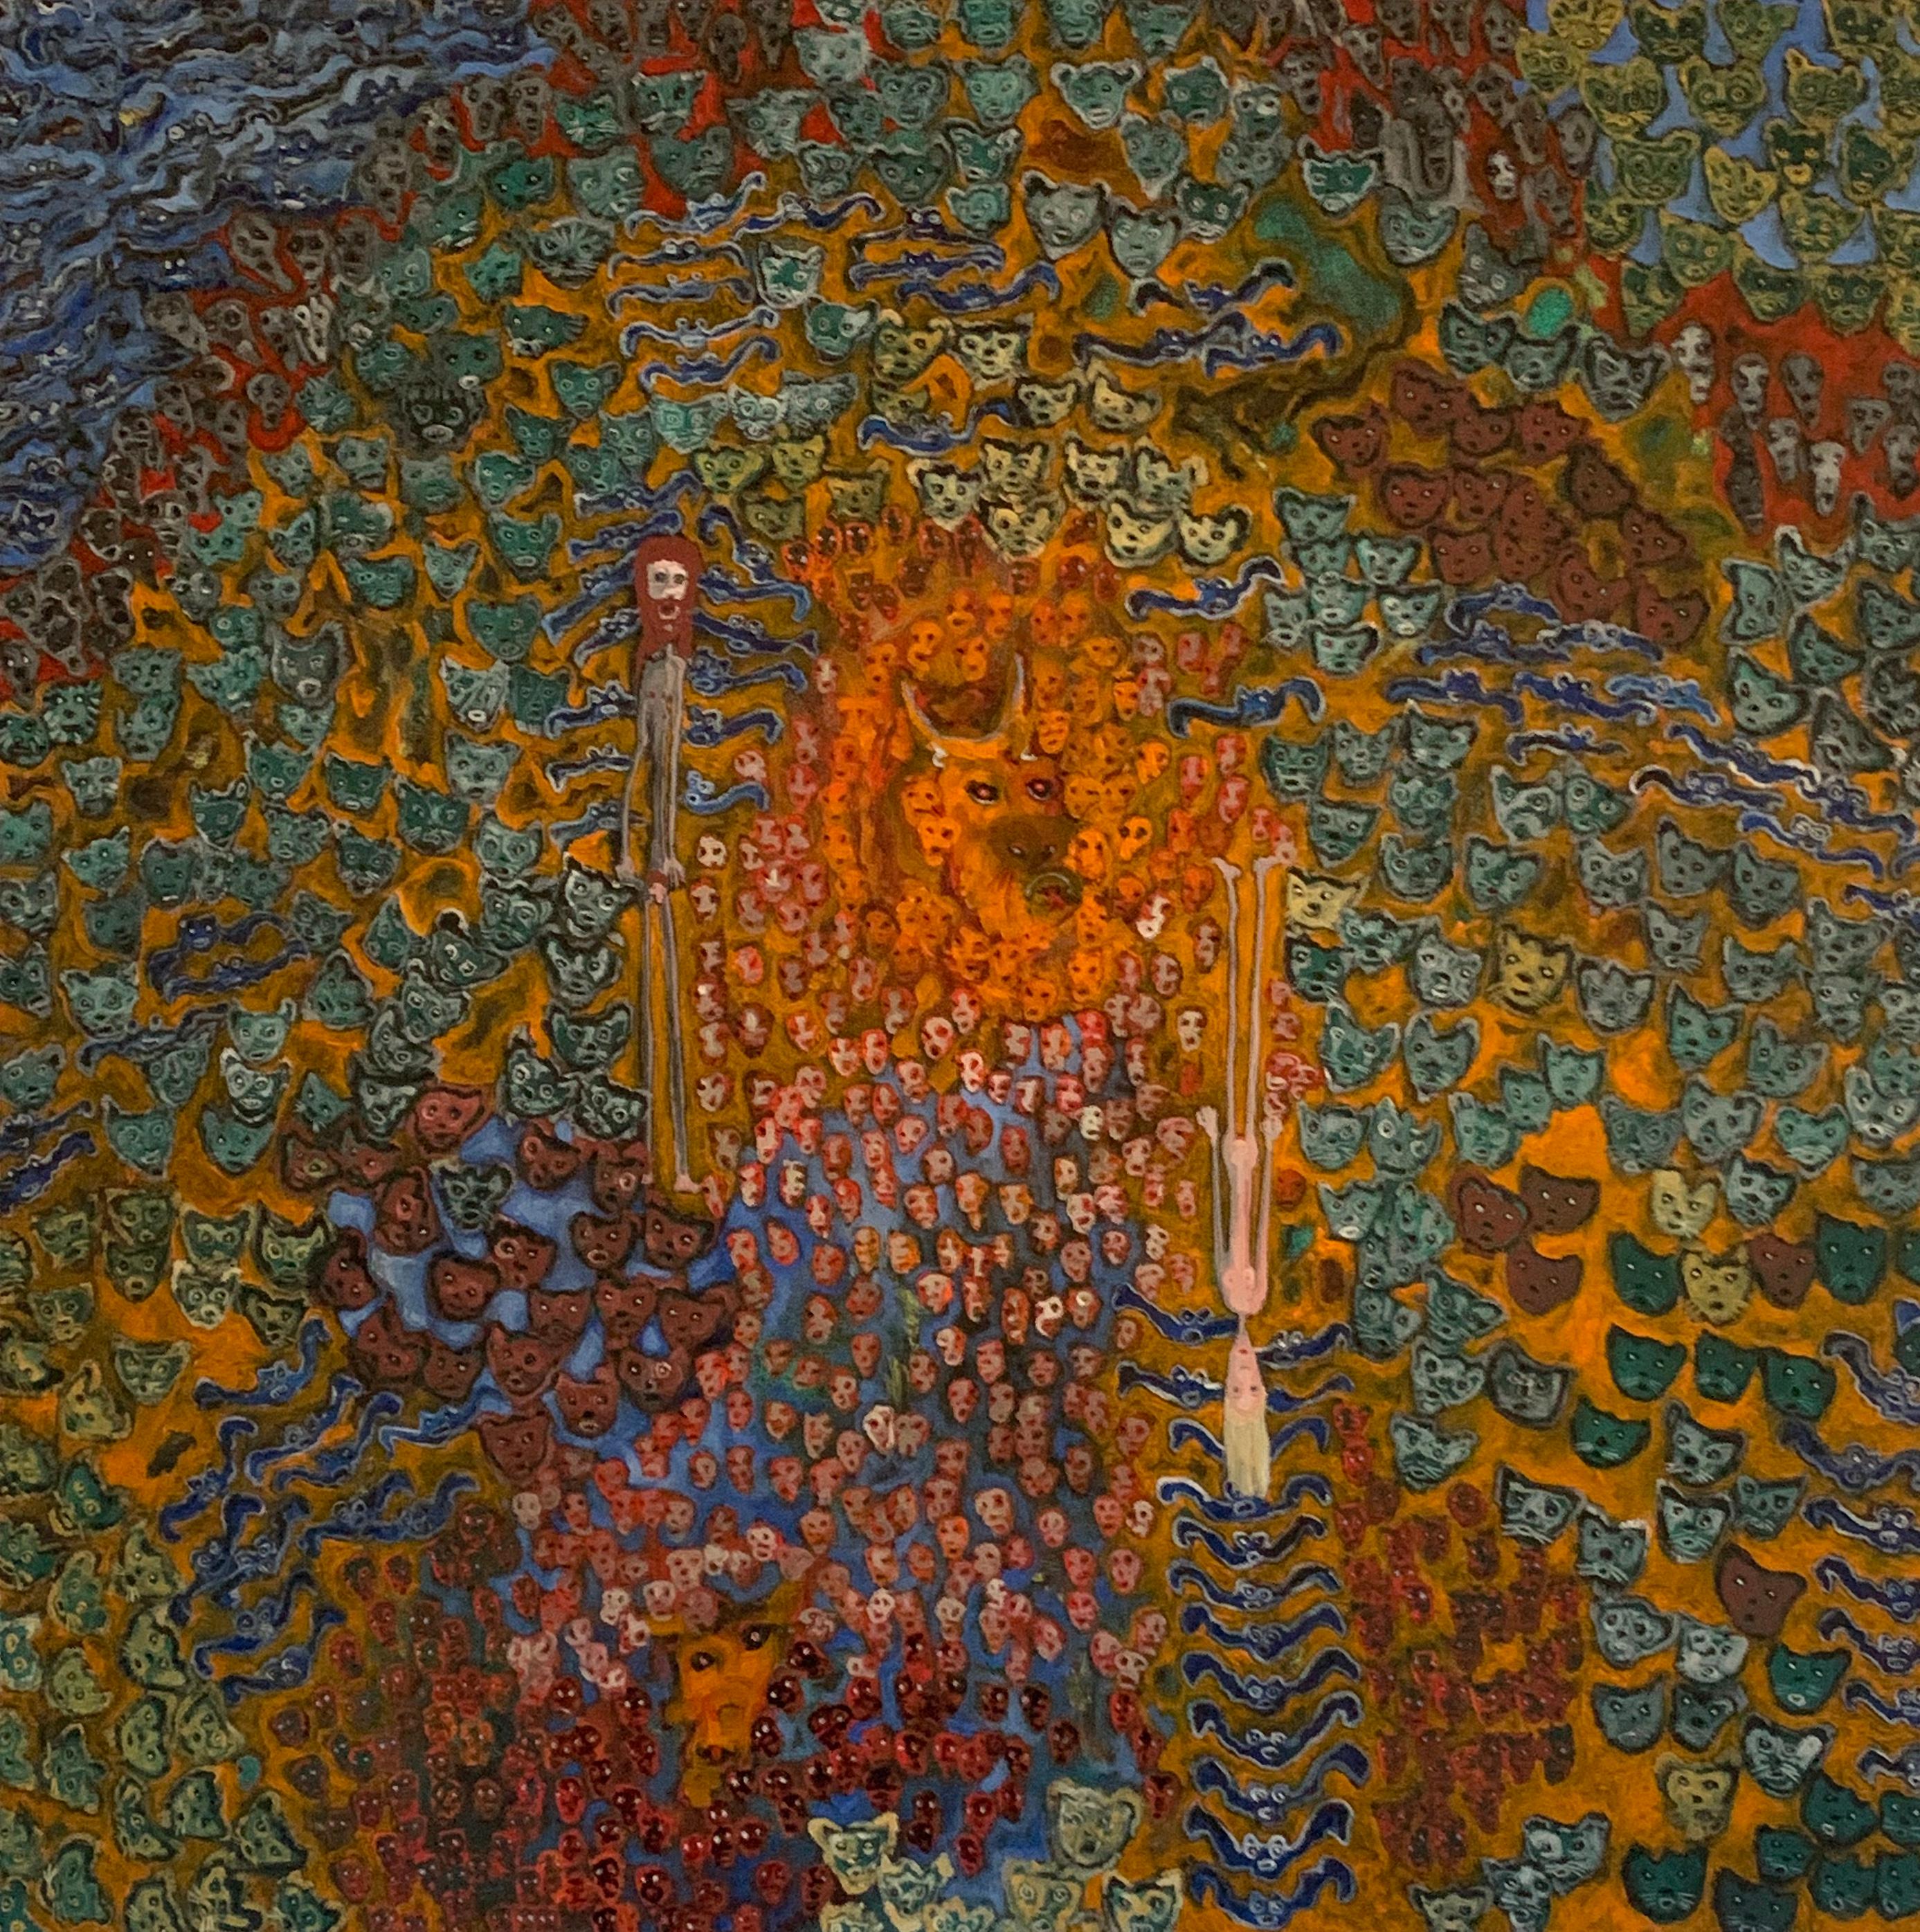 MIDNIGHT IN EDEN - Orange, Blue, Brown Adam and Eve in Surreal Garden at Night - Painting by Constantin Werner